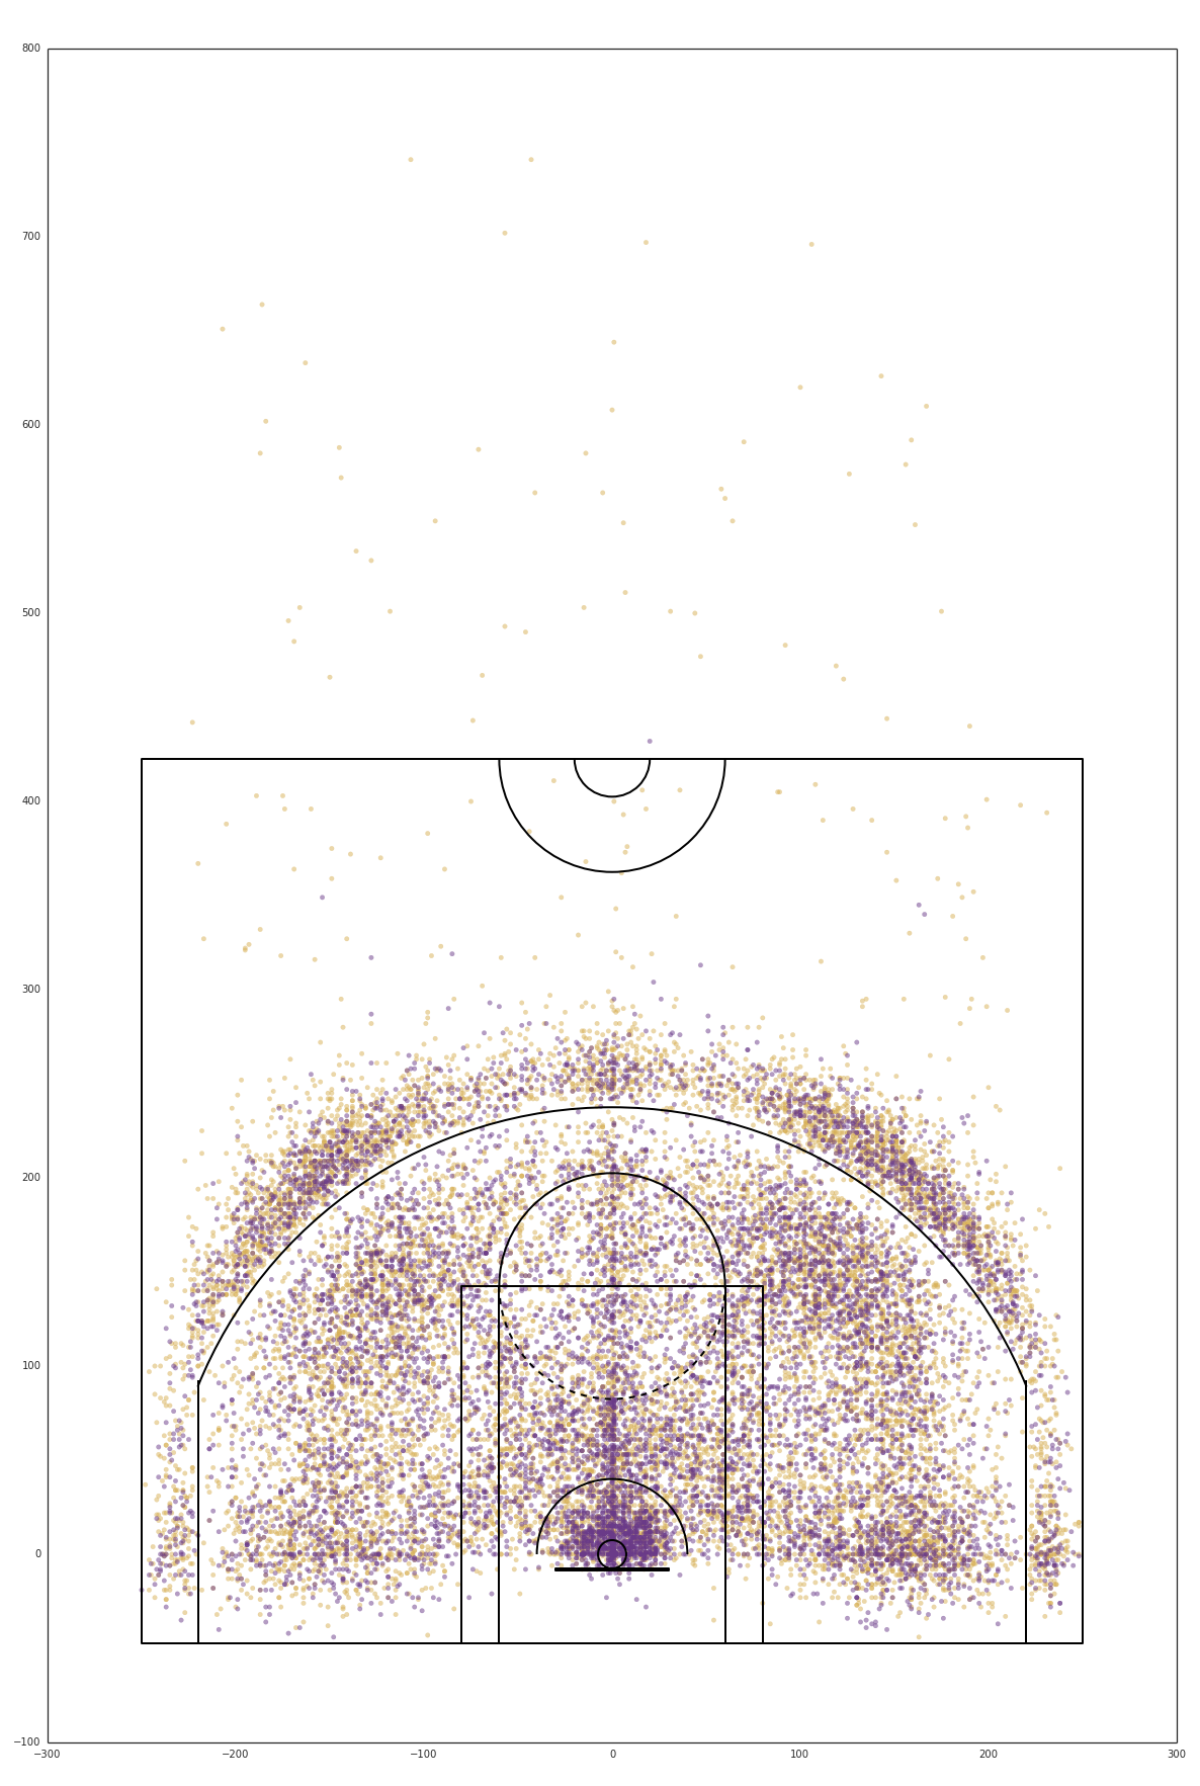 An early Matplotlib plot of Kobe's shot data. (Joe Fox/@latimesgraphics)